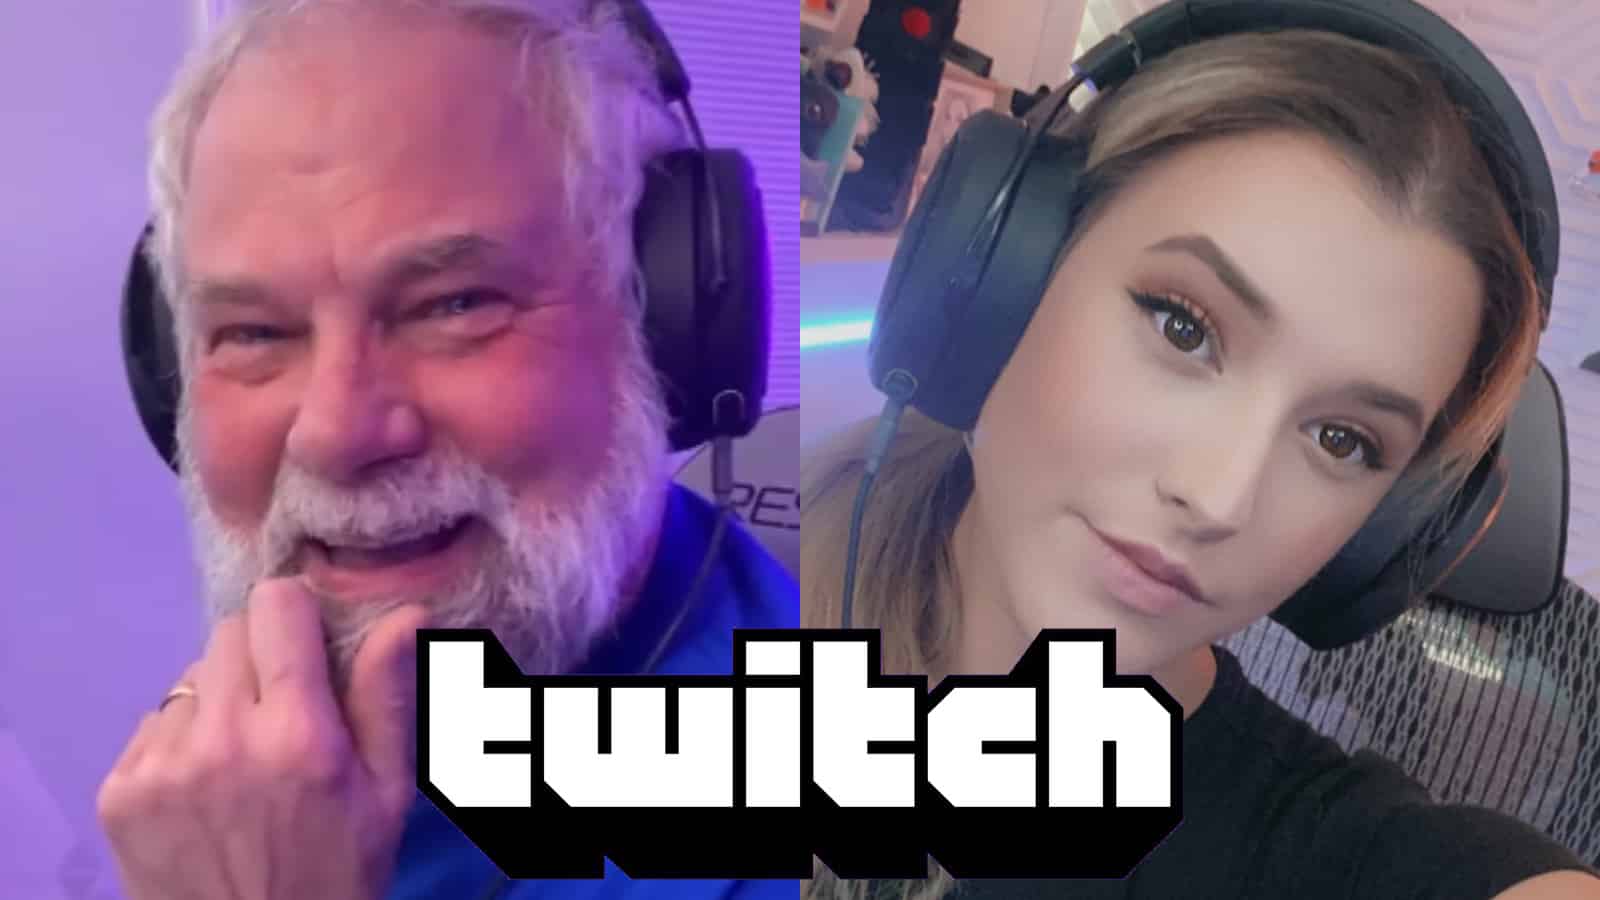 Twitch streamer's dad cries during raid